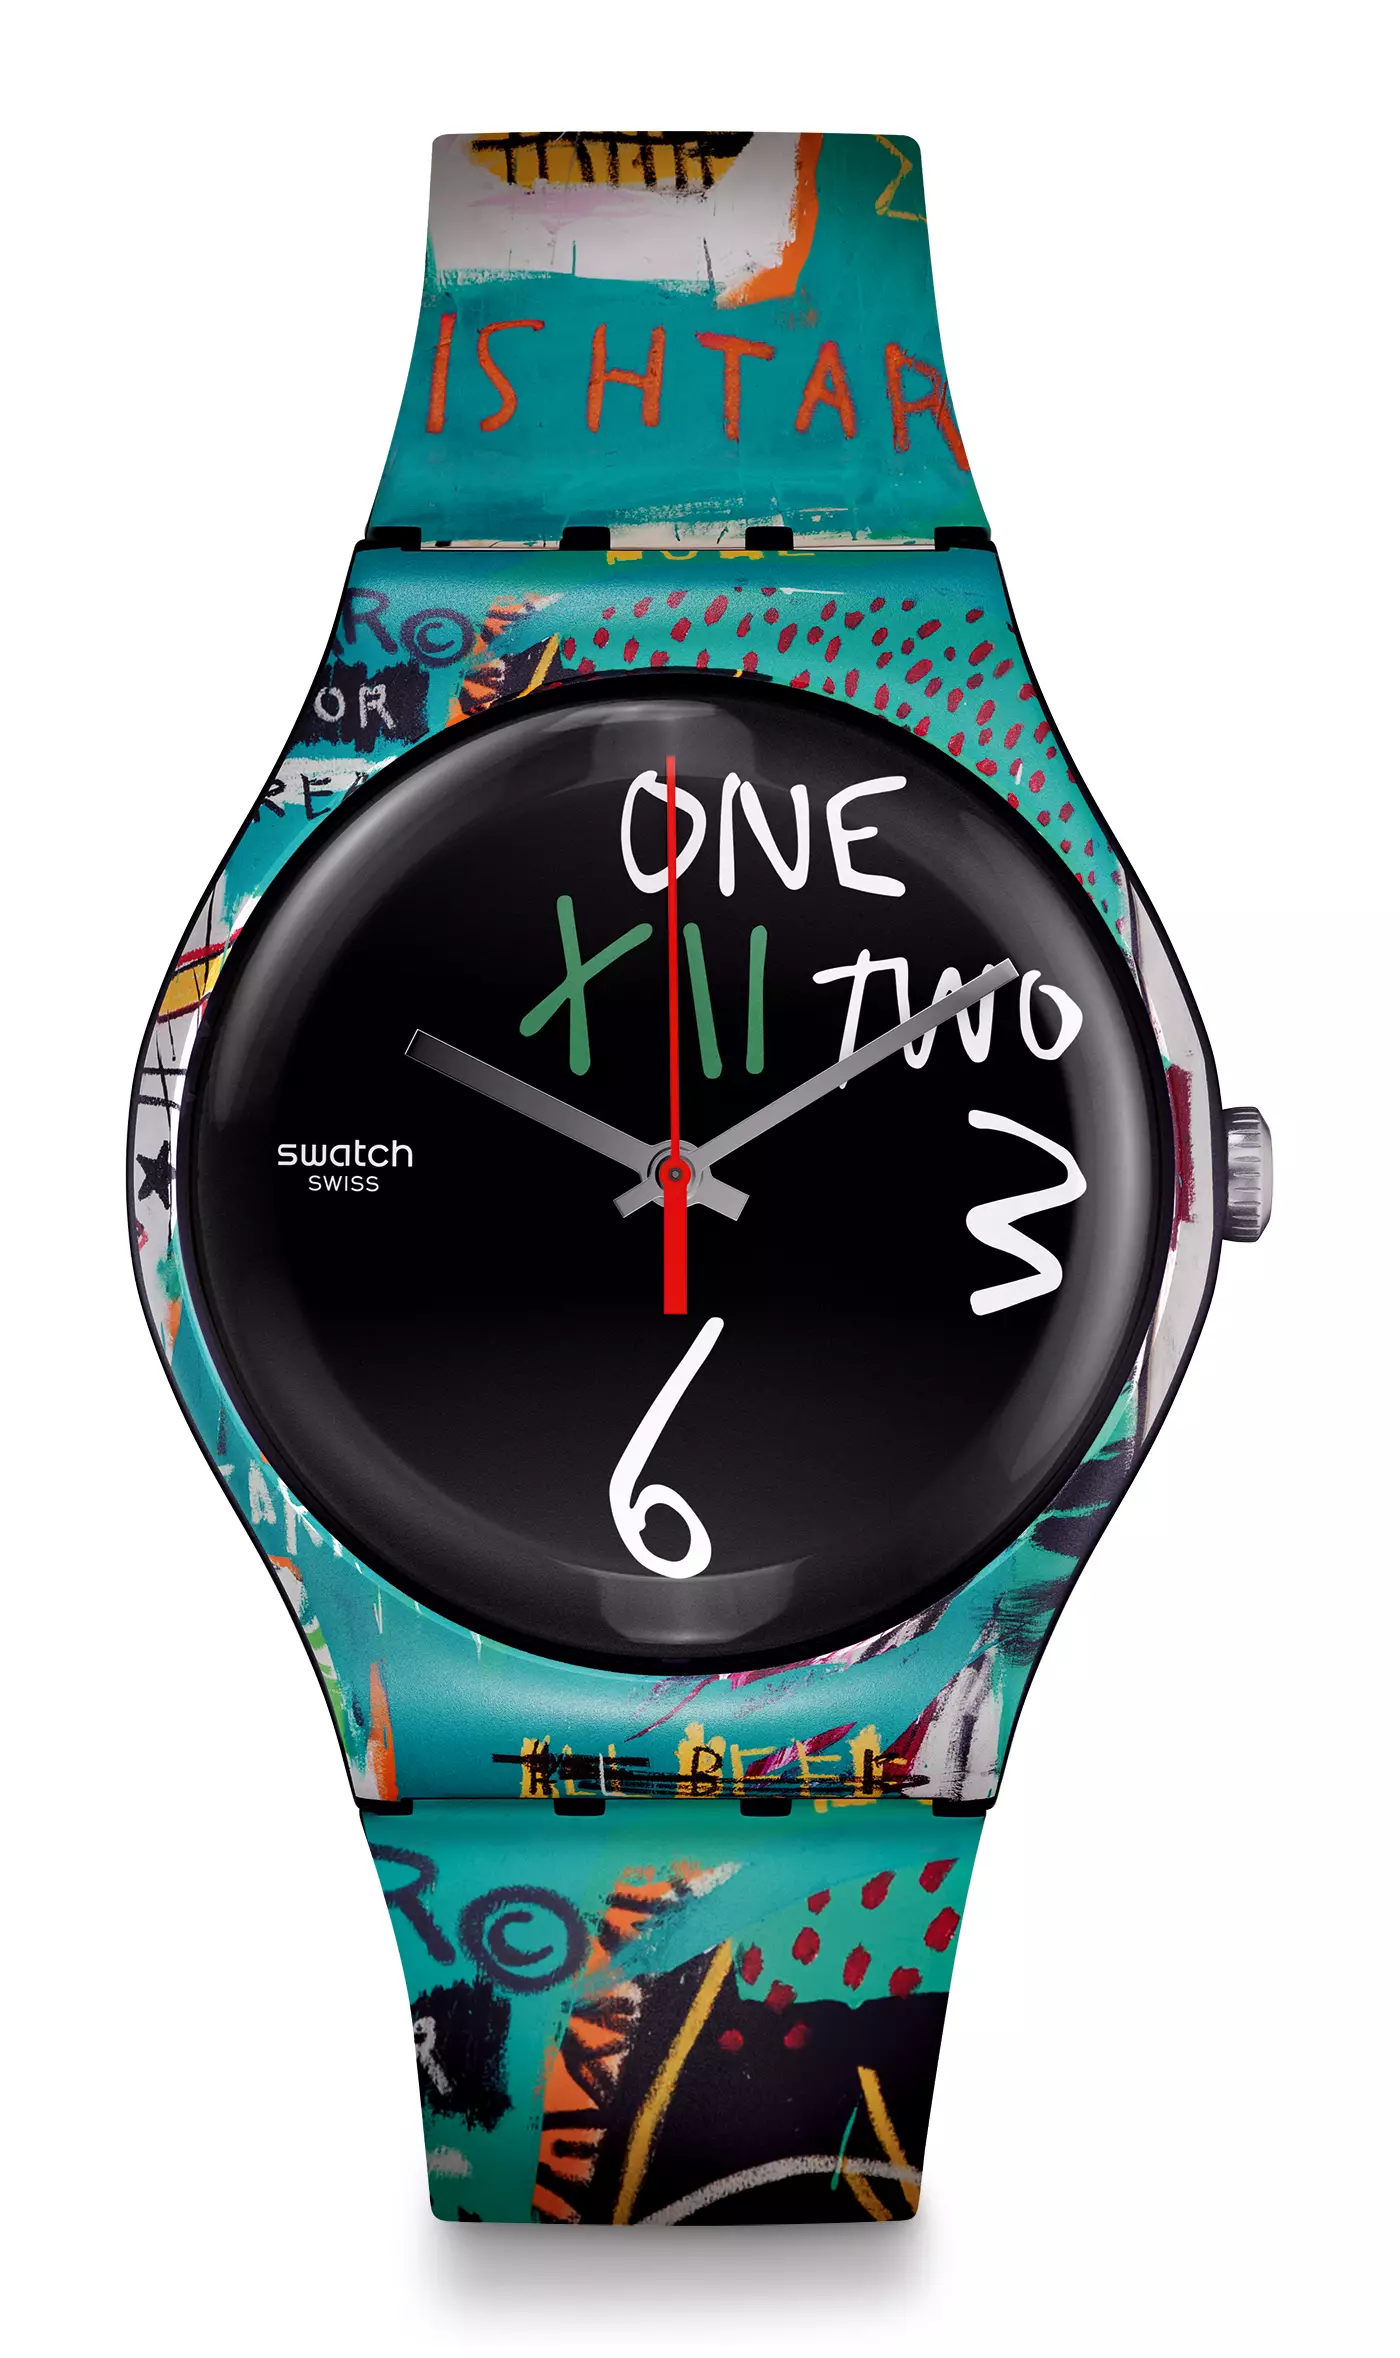 Swatch Art Journey - Jean-Michel Basquiat ISHTAR